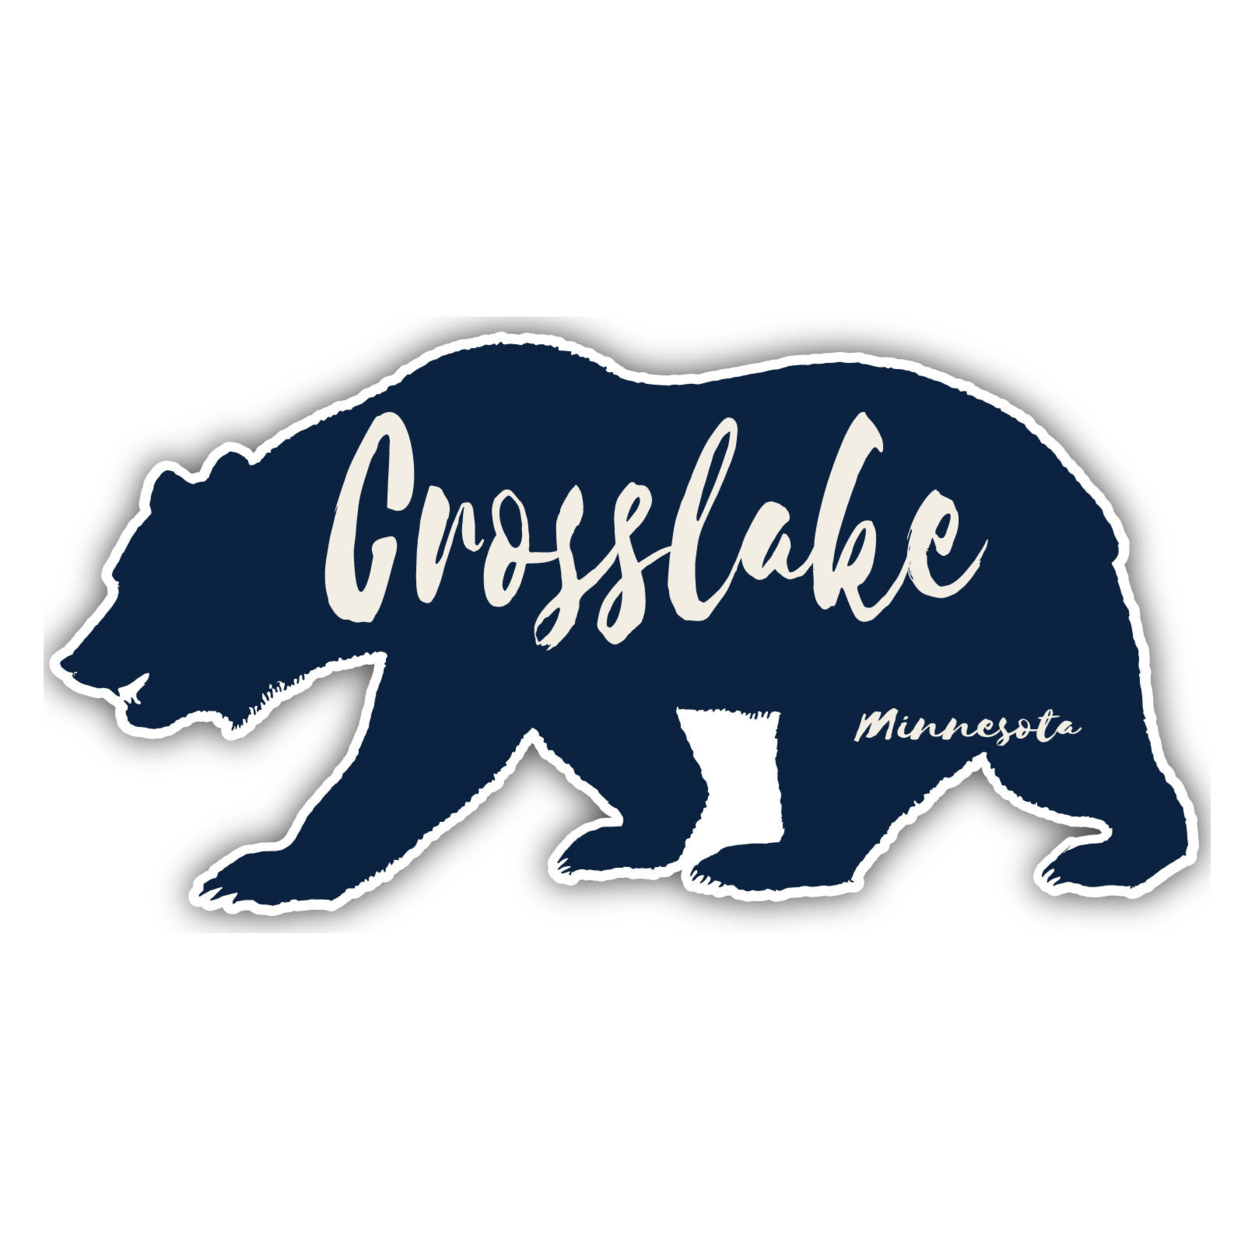 Crosslake Minnesota Souvenir Decorative Stickers (Choose Theme And Size) - Single Unit, 8-Inch, Bear